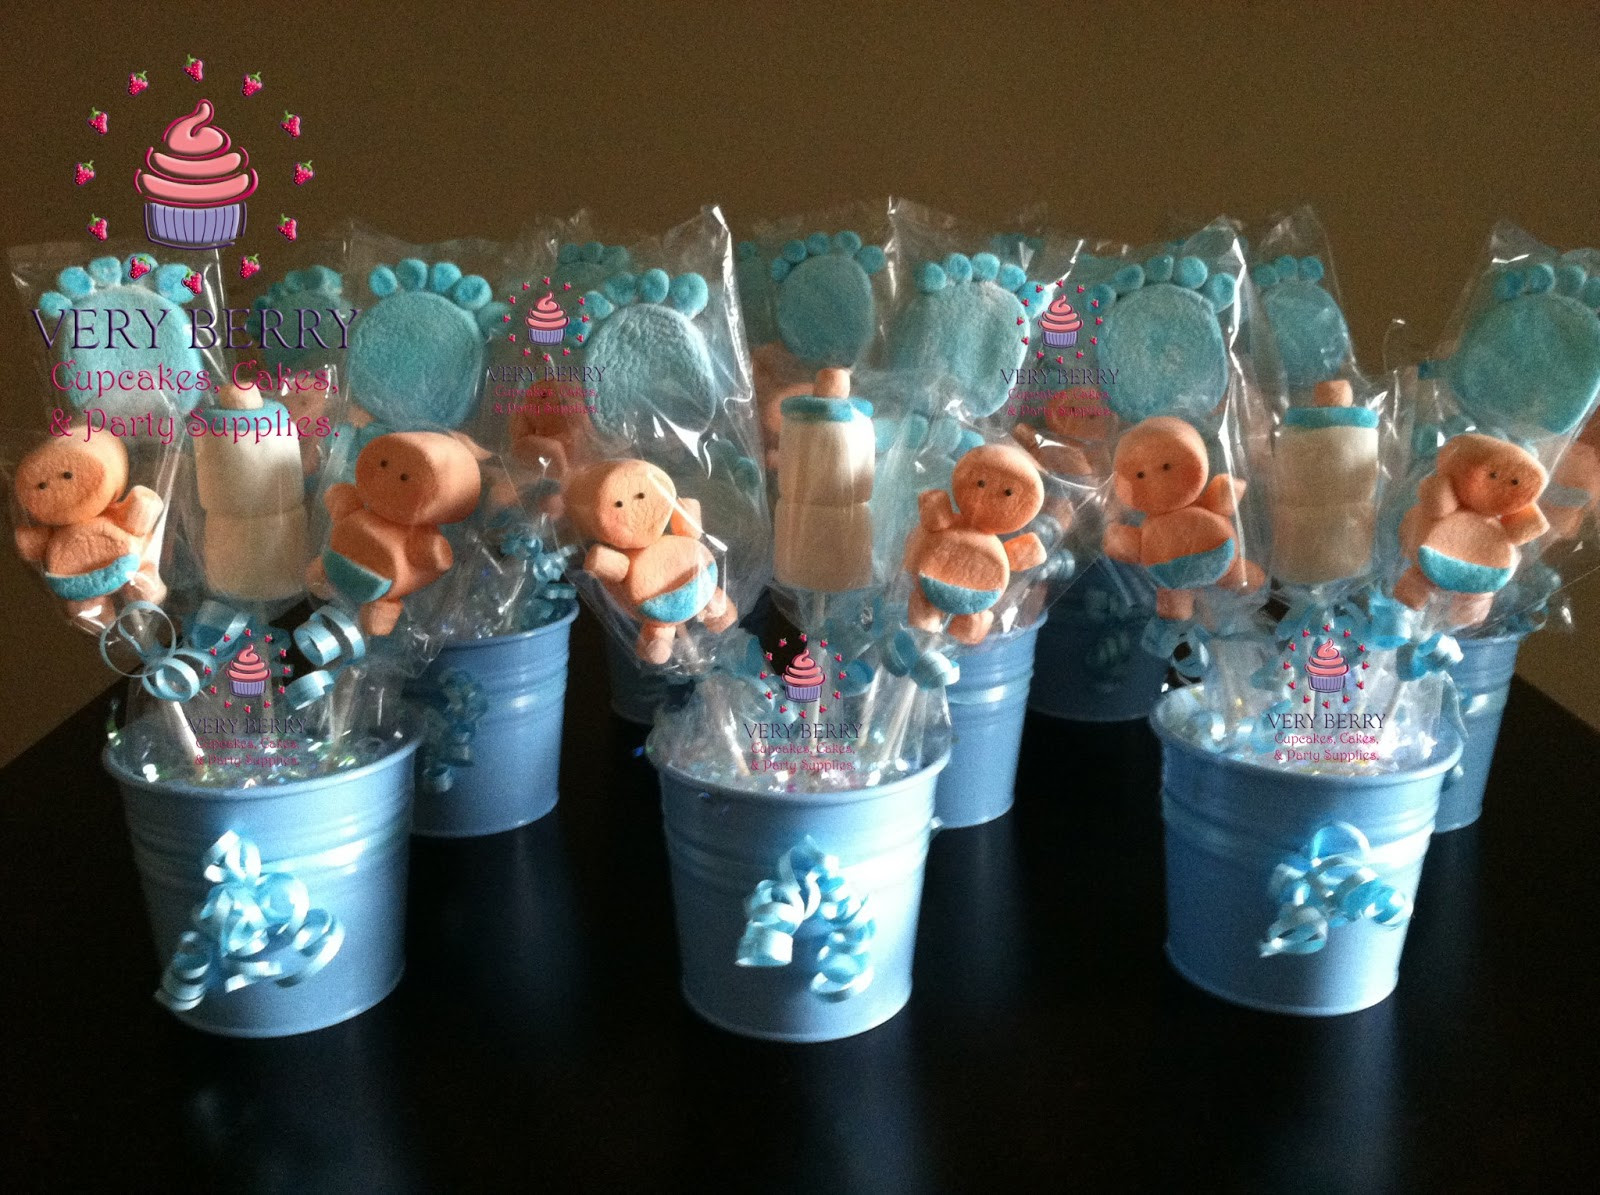 DIY Baby Shower Centerpieces Boy
 Veryberry Cupcakes BOY BABY SHOWER MARSHMALLOW CENTERPIECES